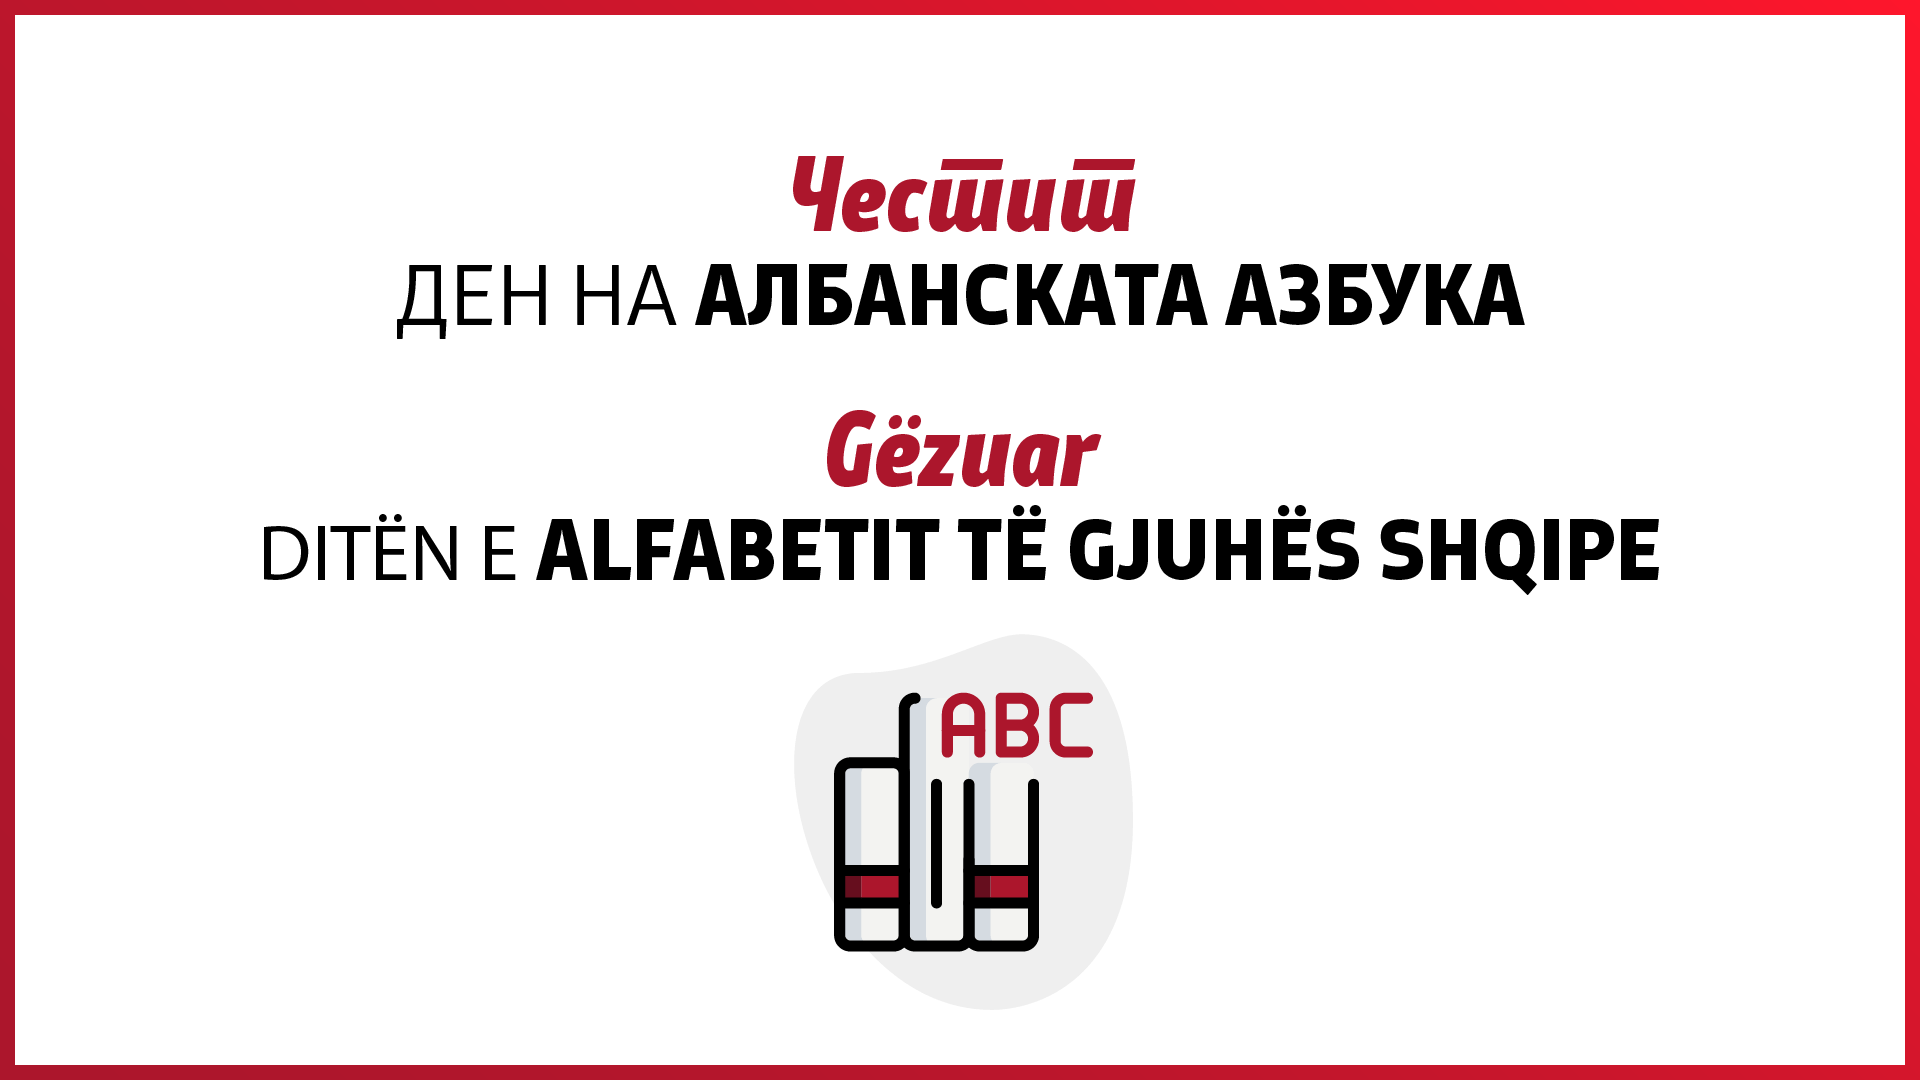 Премиерот Заев го честиташе Денот на албанската азбука